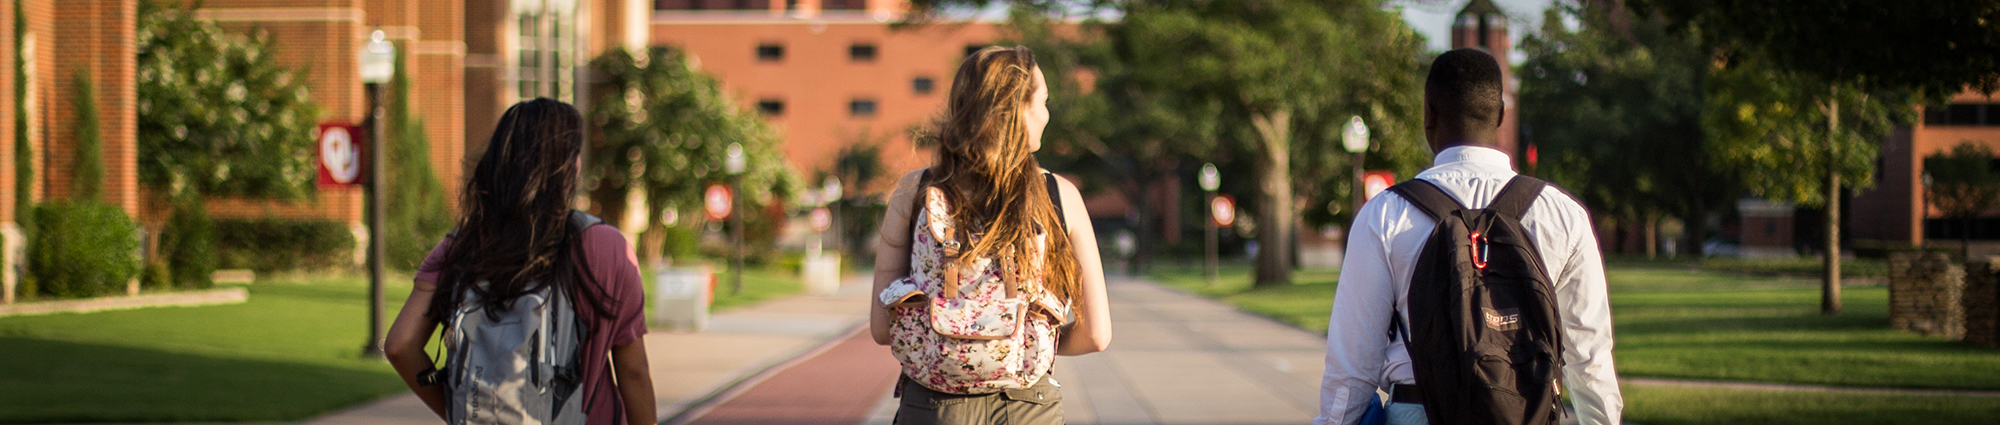 Students walking on the University of Oklahoma campus.